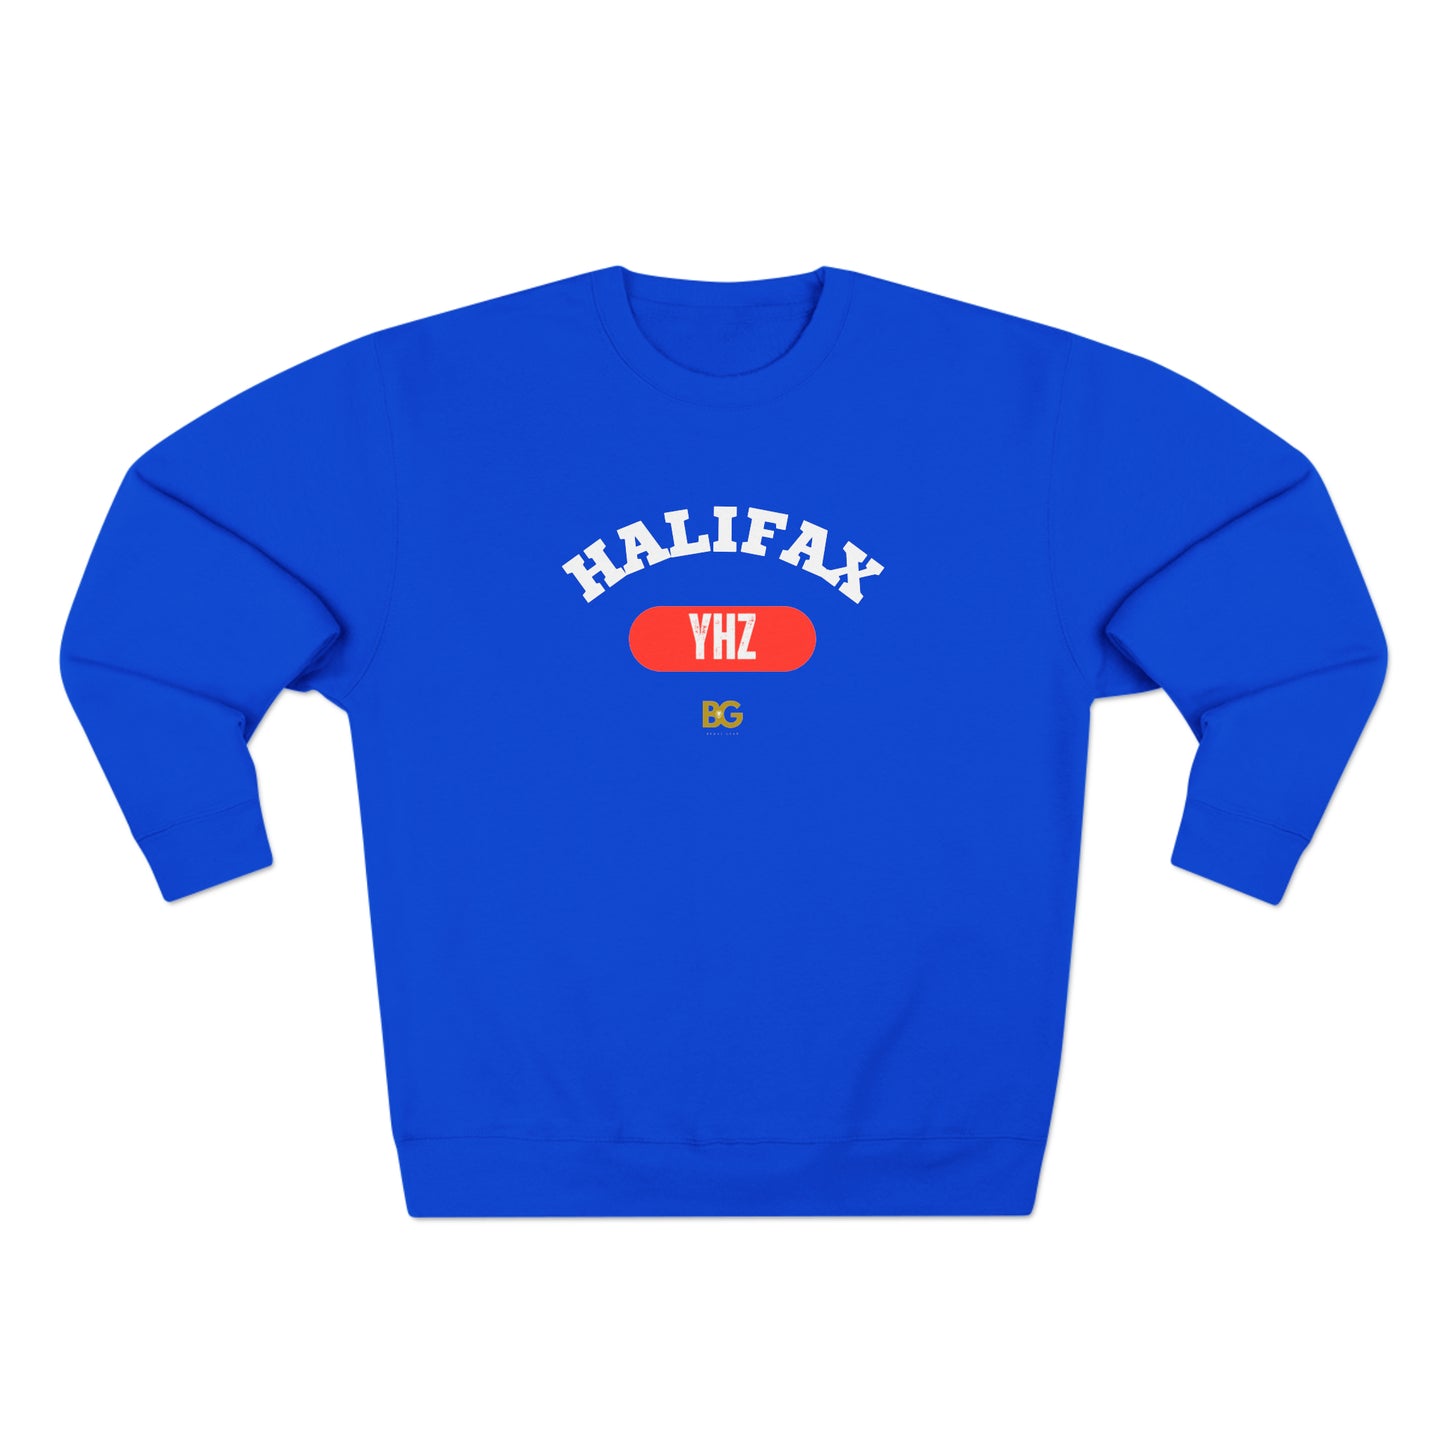 BG "Halifax YHZ" Premium Crewneck Sweatshirt